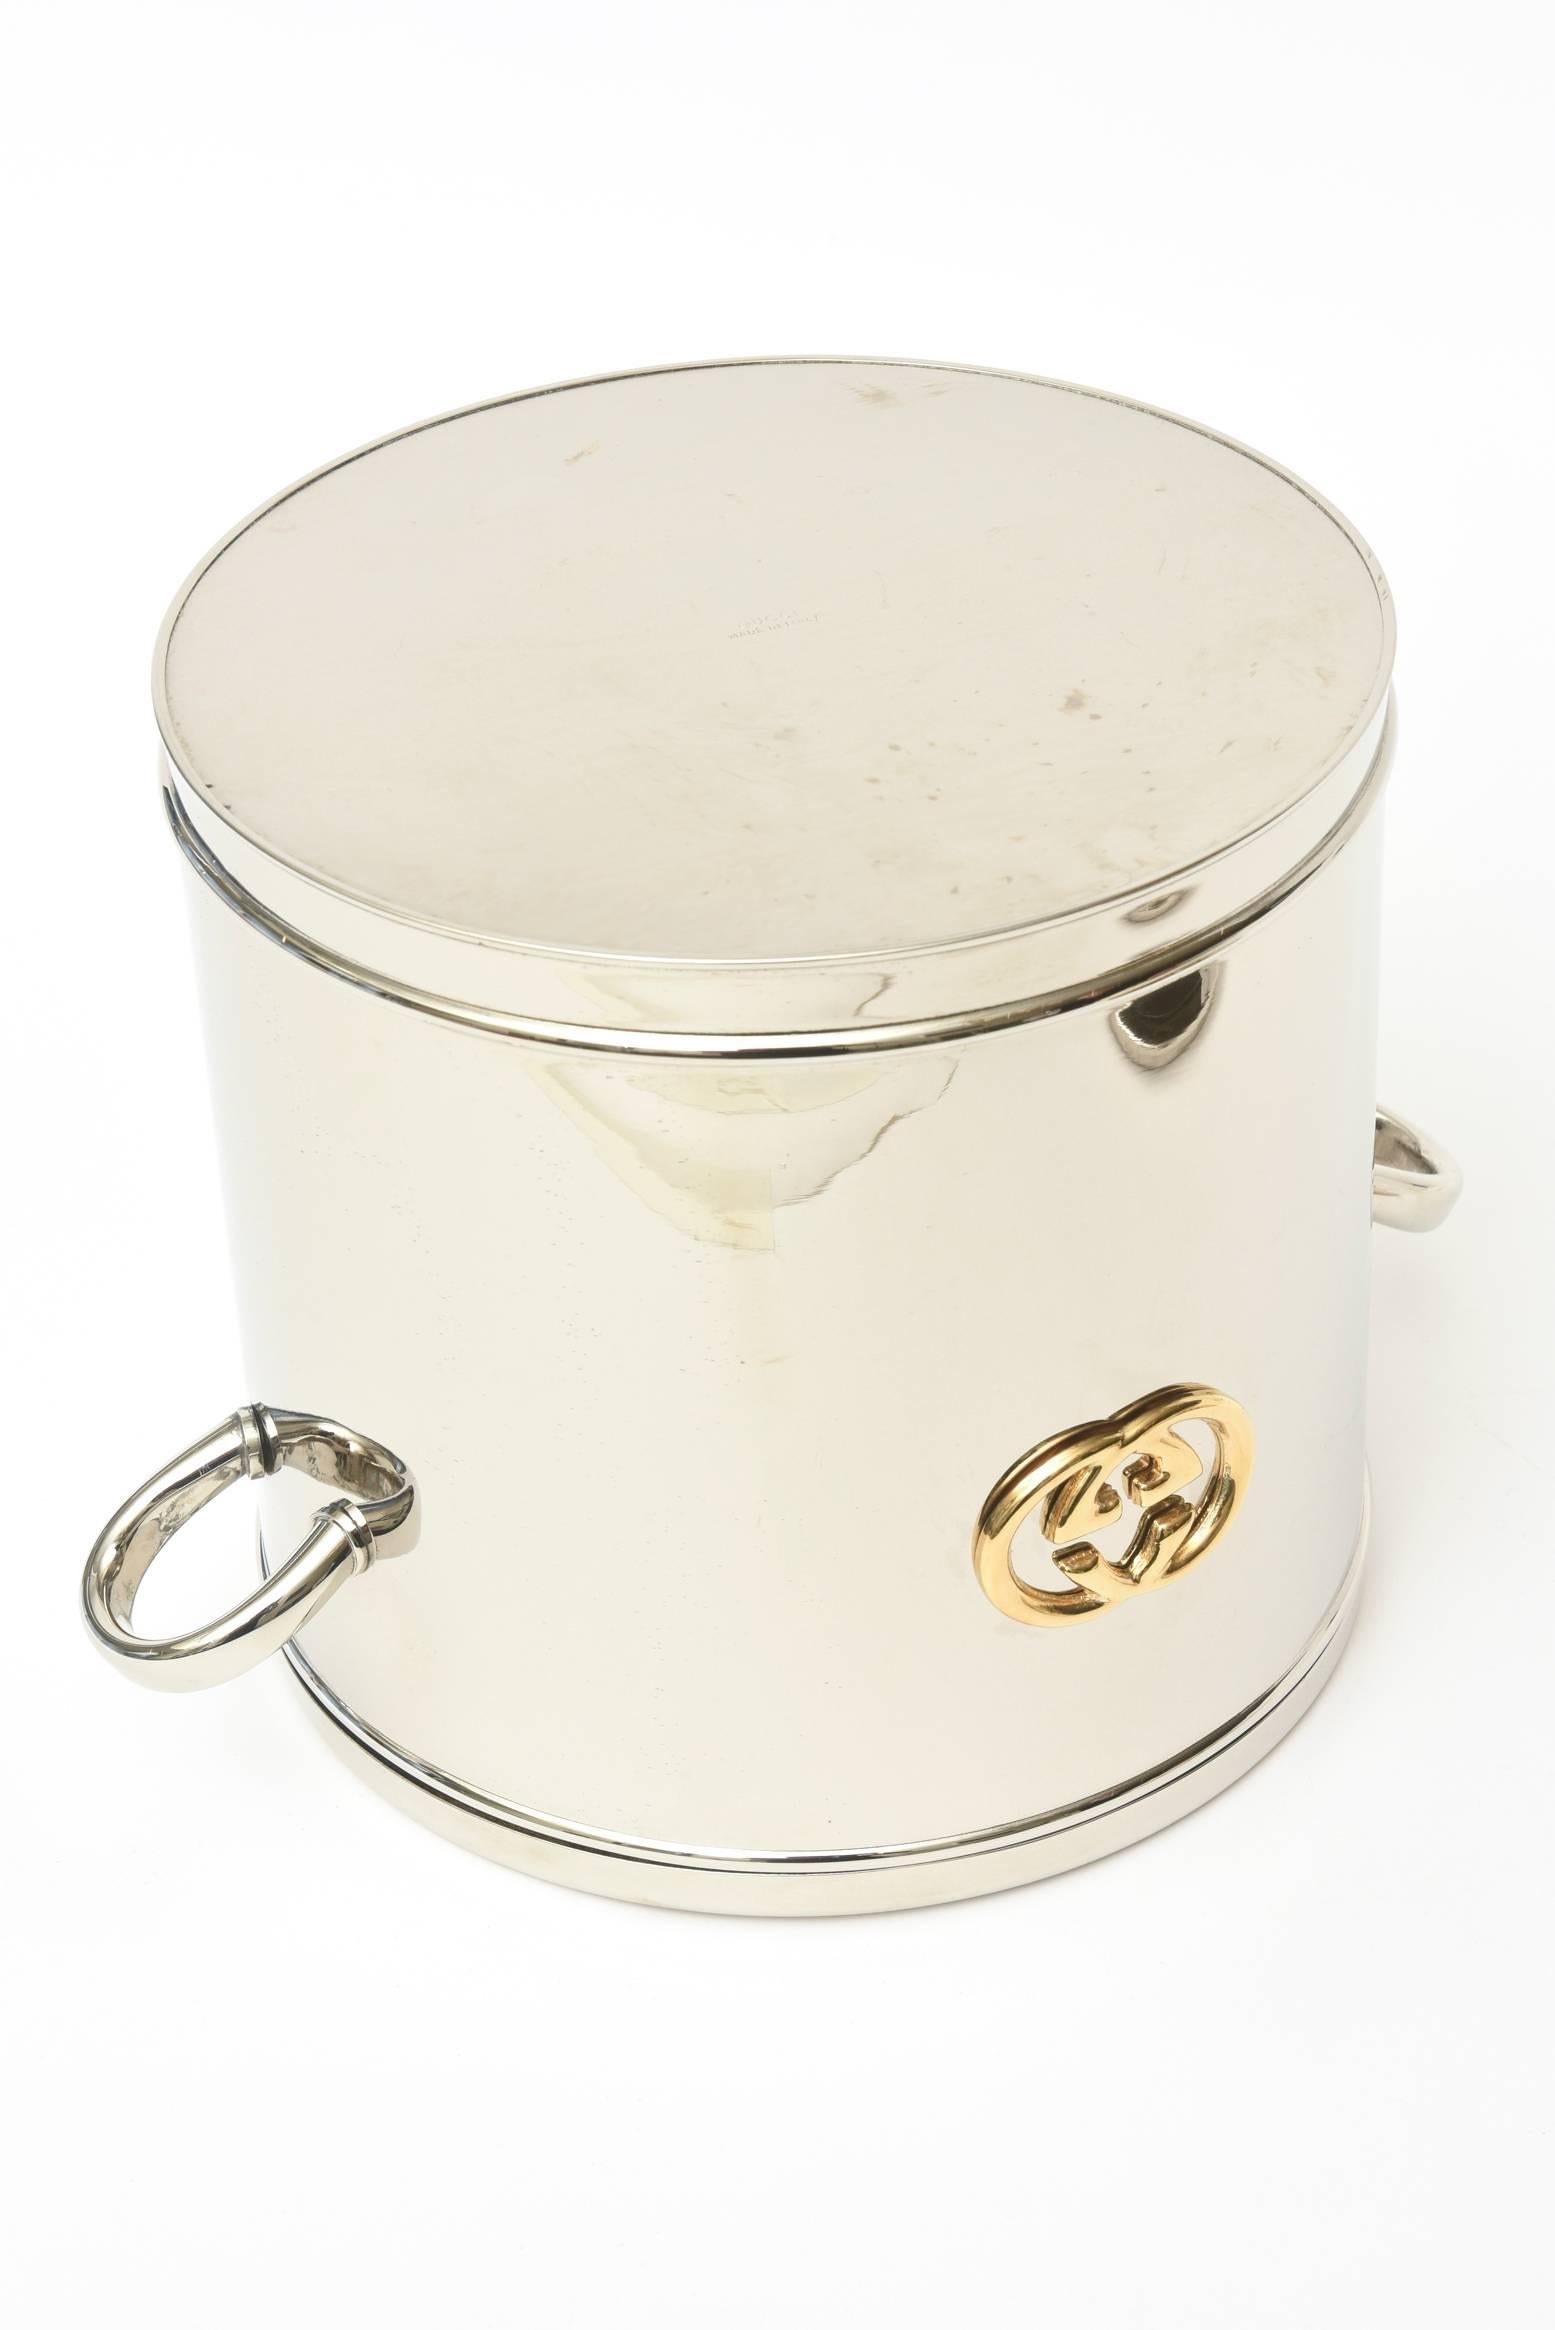 Italian Vintage Gucci 22-Karat Gold Plate & Silver Plate Ice Bucket /Barware  3